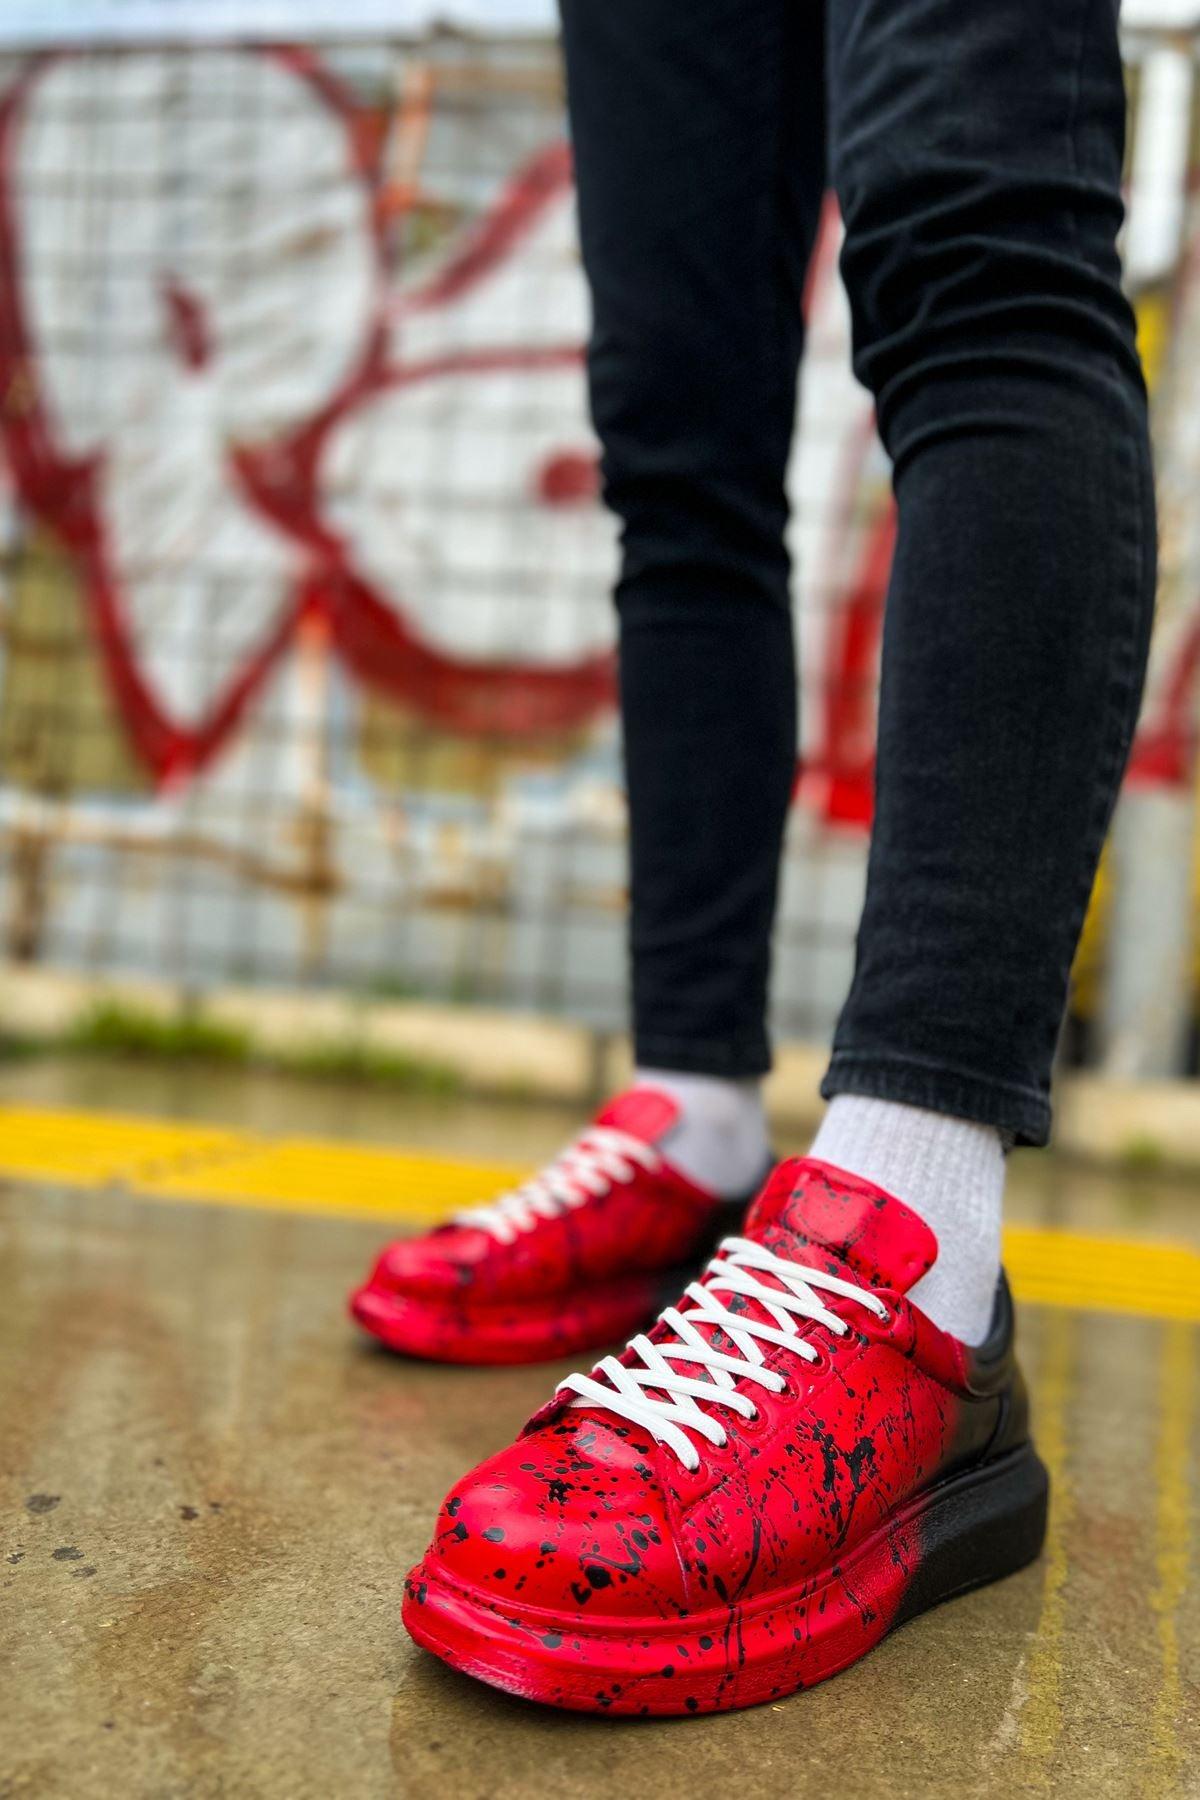 CH254 Men's Sports Sneakers Shoes RED BLACK SPLUSH - STREET MODE ™